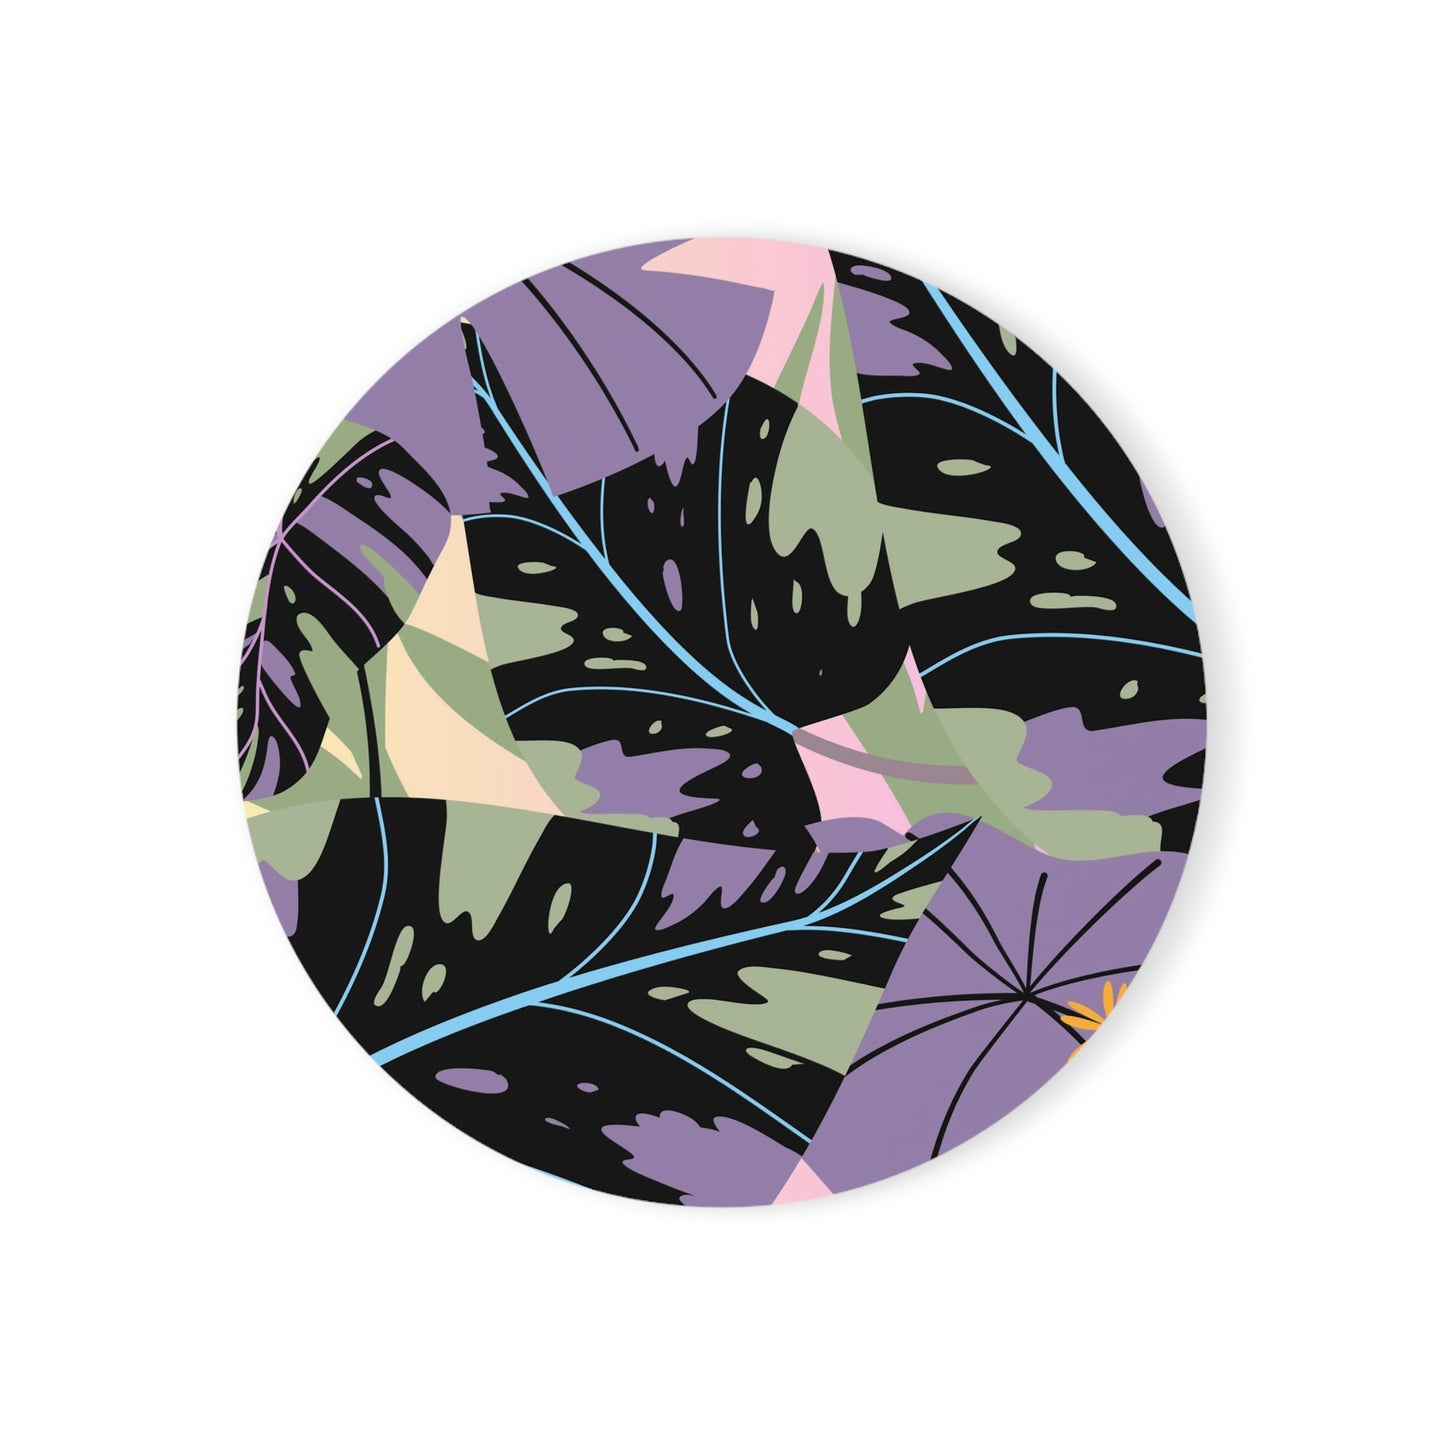 Lavender Jungle Collection Coasters